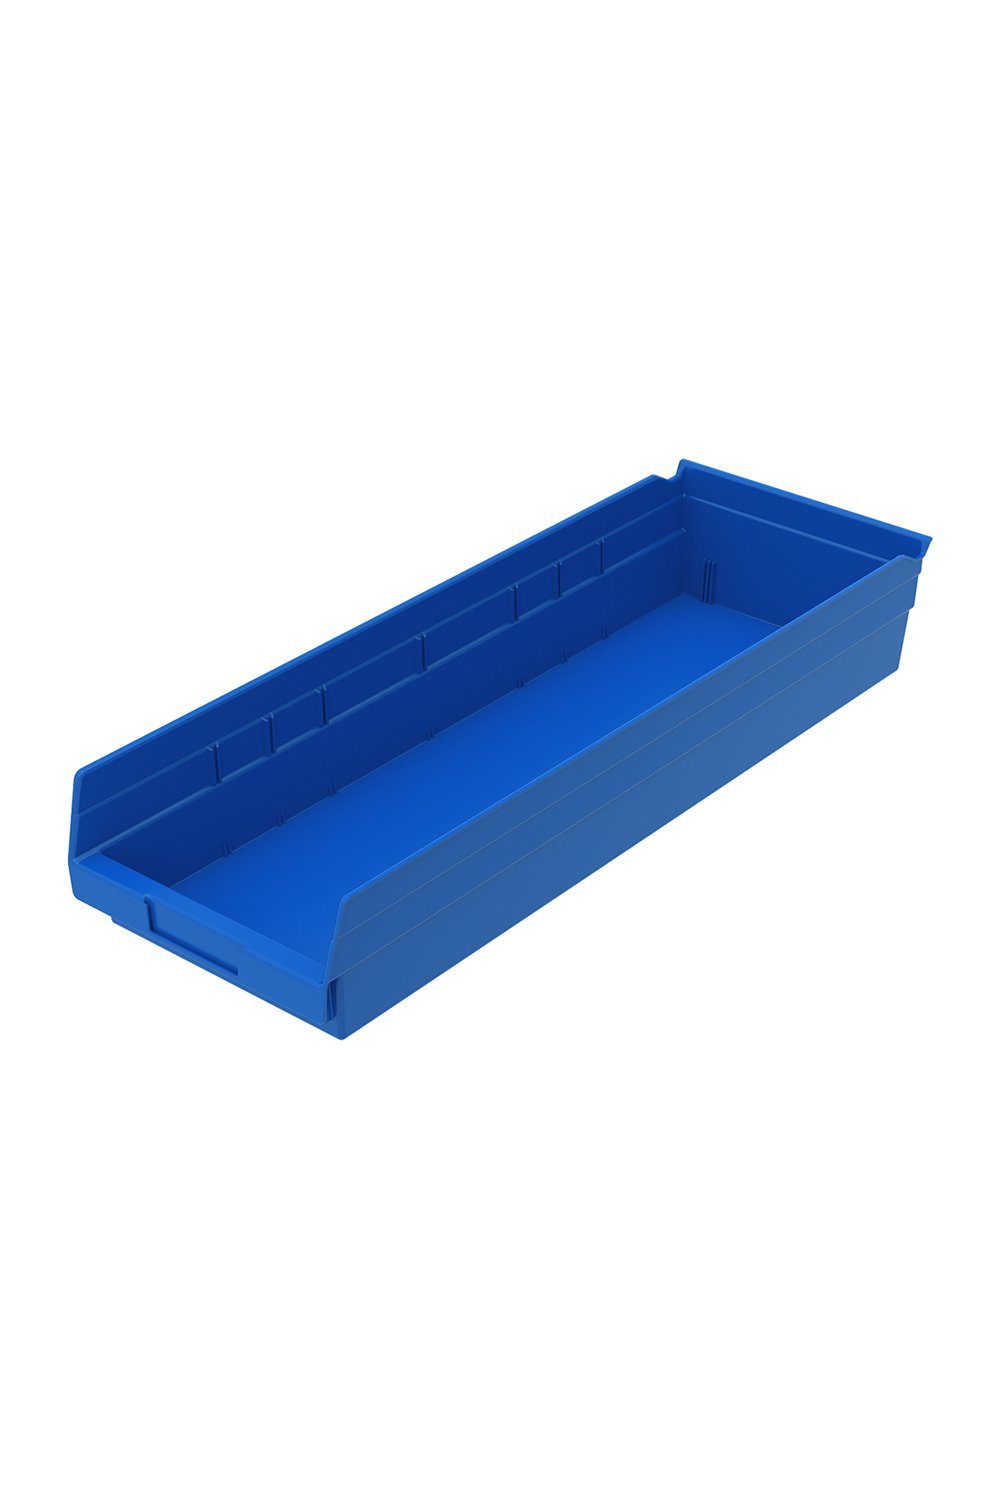 Shelf Bin for 24"D Shelves Bins & Containers Acart 23-5/8'' x 8-3/8'' x 4'' Blue 